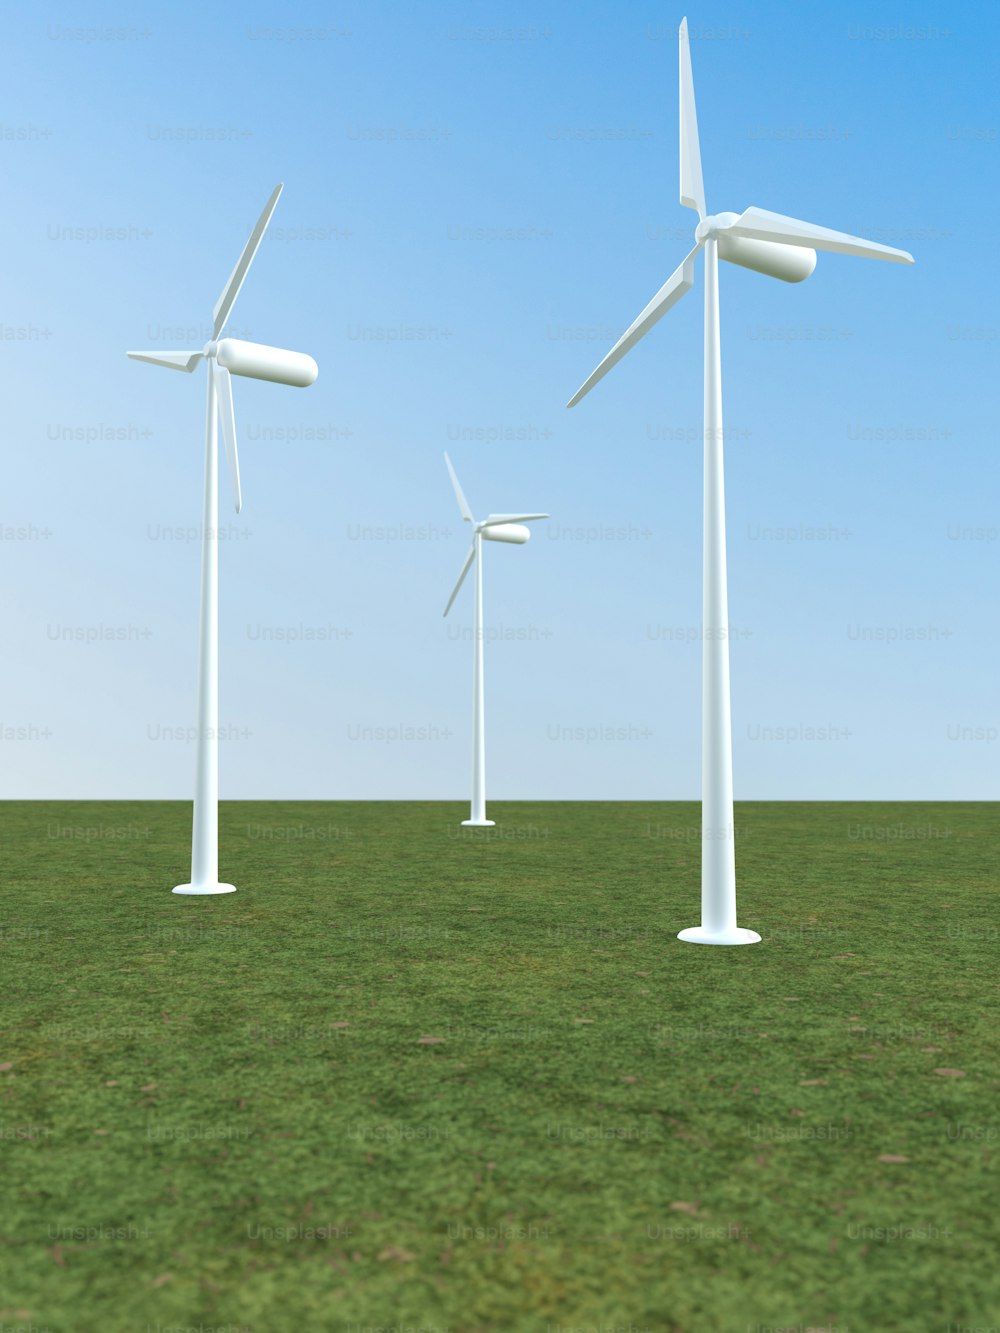 a row of wind turbines in a grassy field